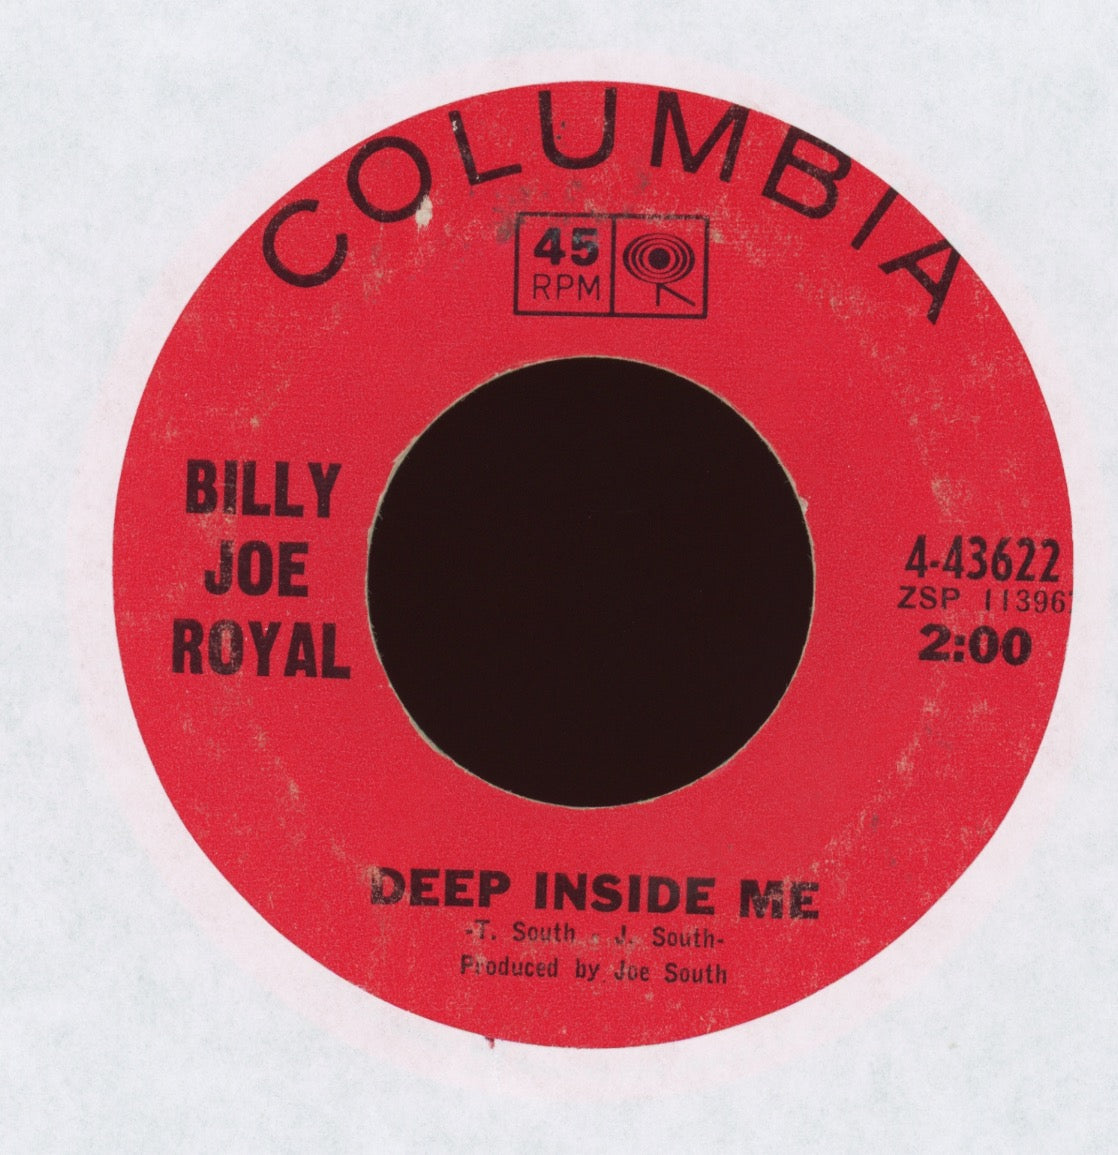 Billy Joe Royal - Heart's Desire on Columbia